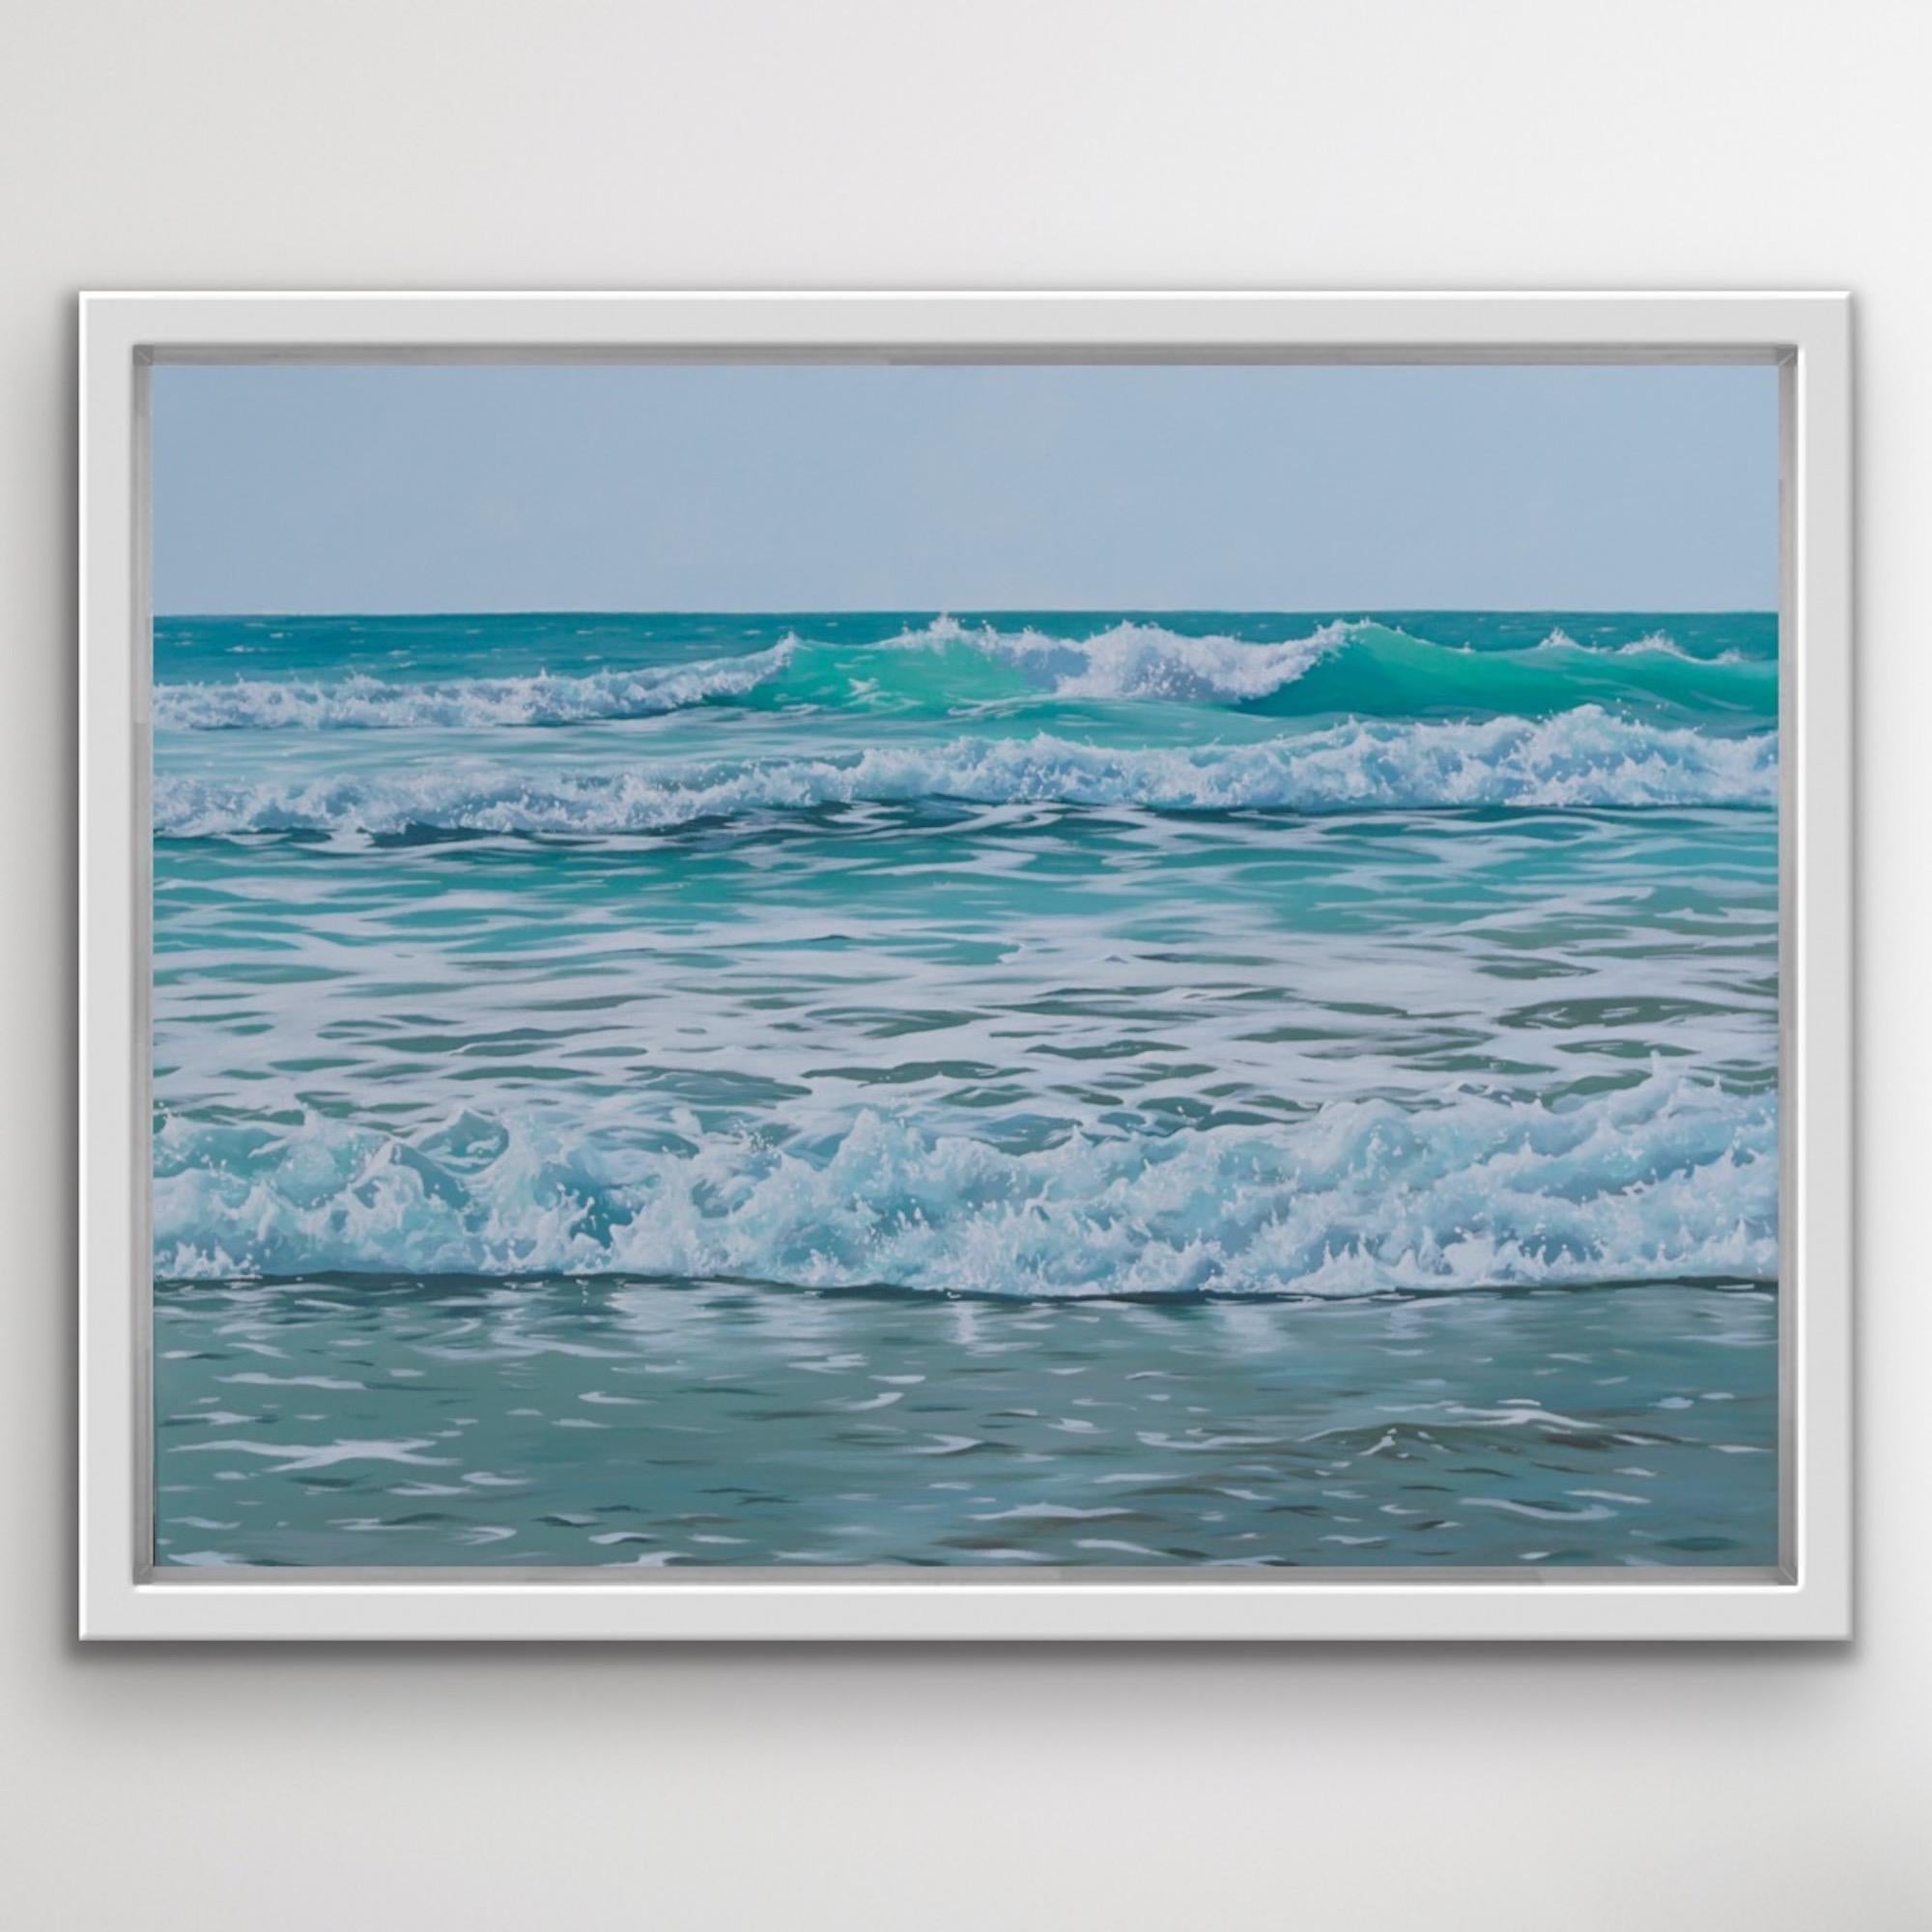 Smaragdwellen, Acrylgemälde von Meereslandschaften, zeitgenössisches Landschaftsgemälde (Realismus), Painting, von Jo Quigley